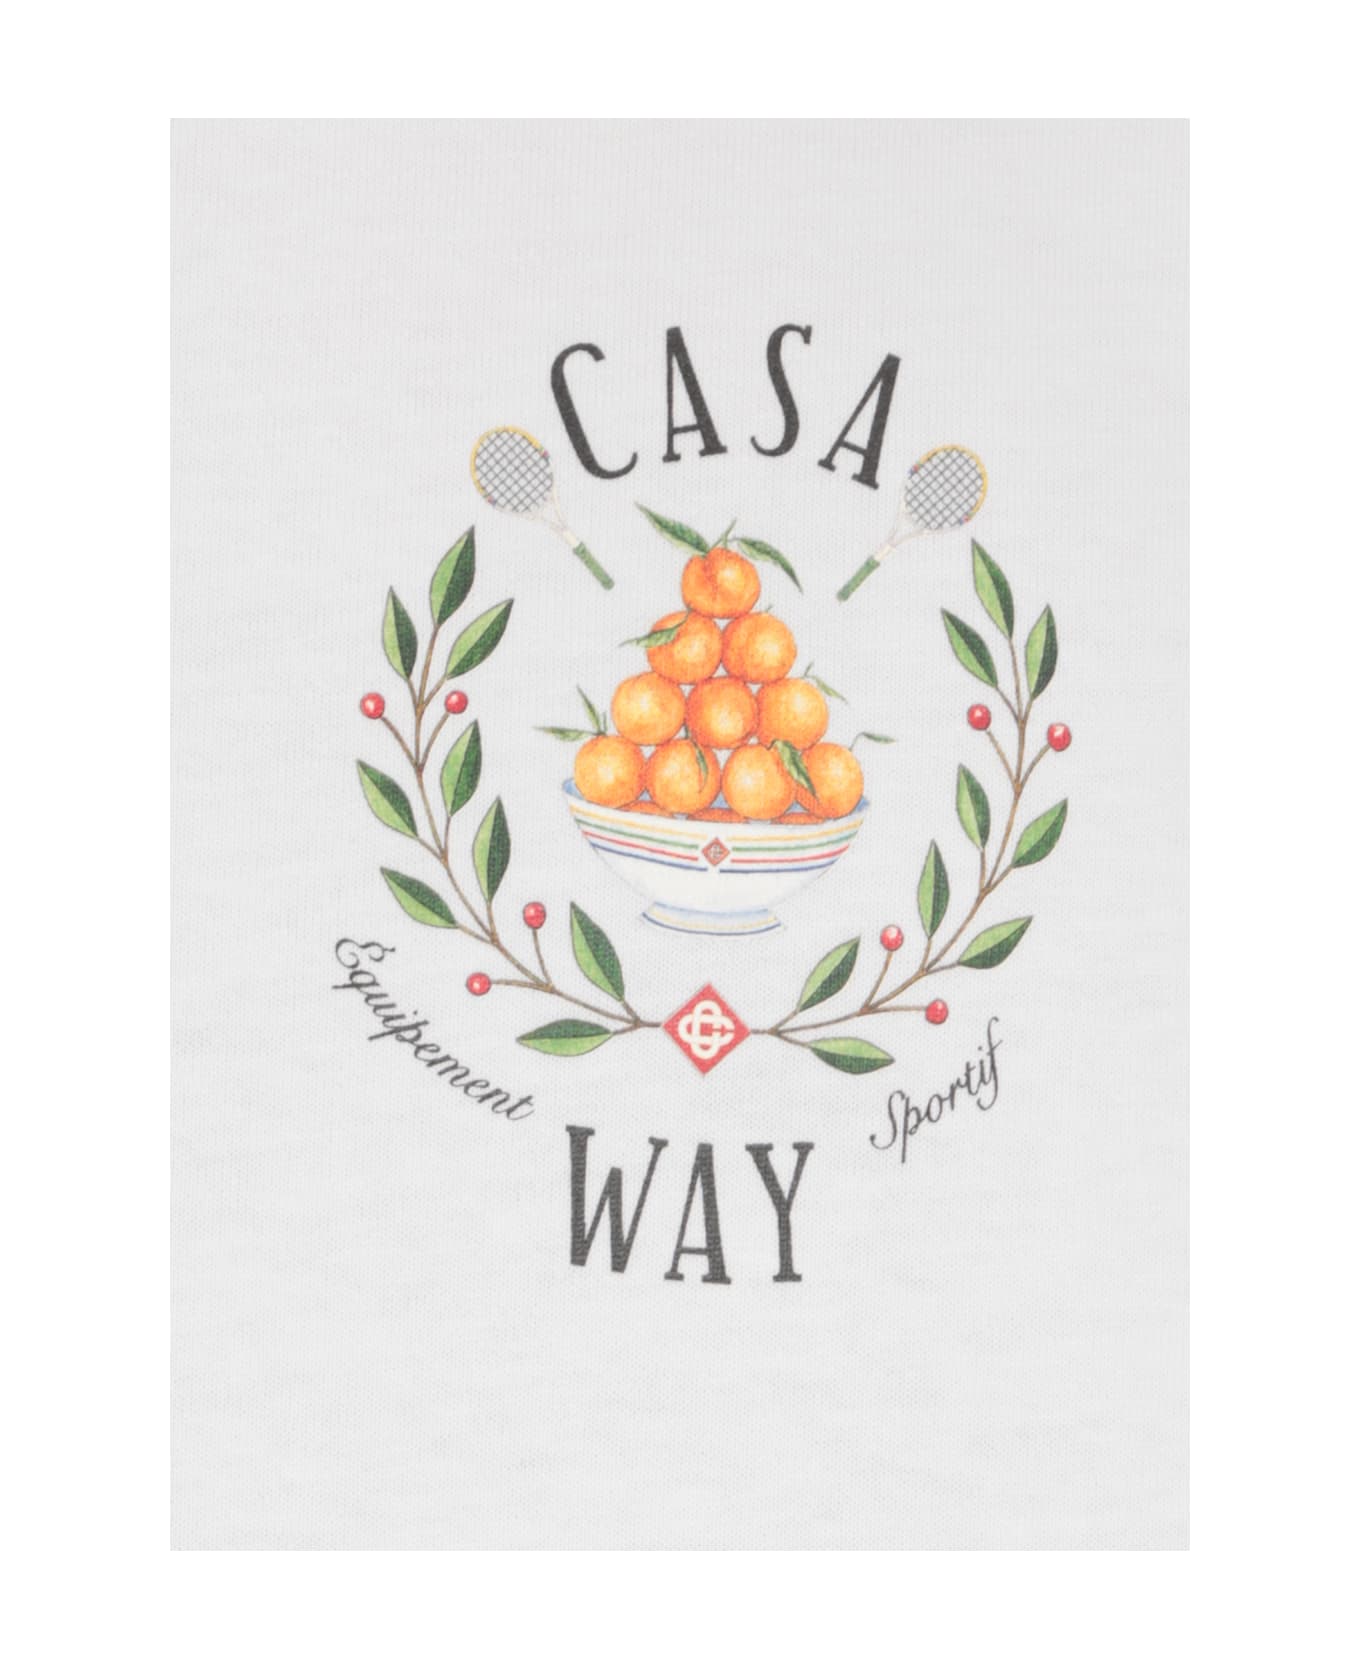 Casablanca 'casa Way' White Organic Cotton T-shirt - Casa Way Tシャツ